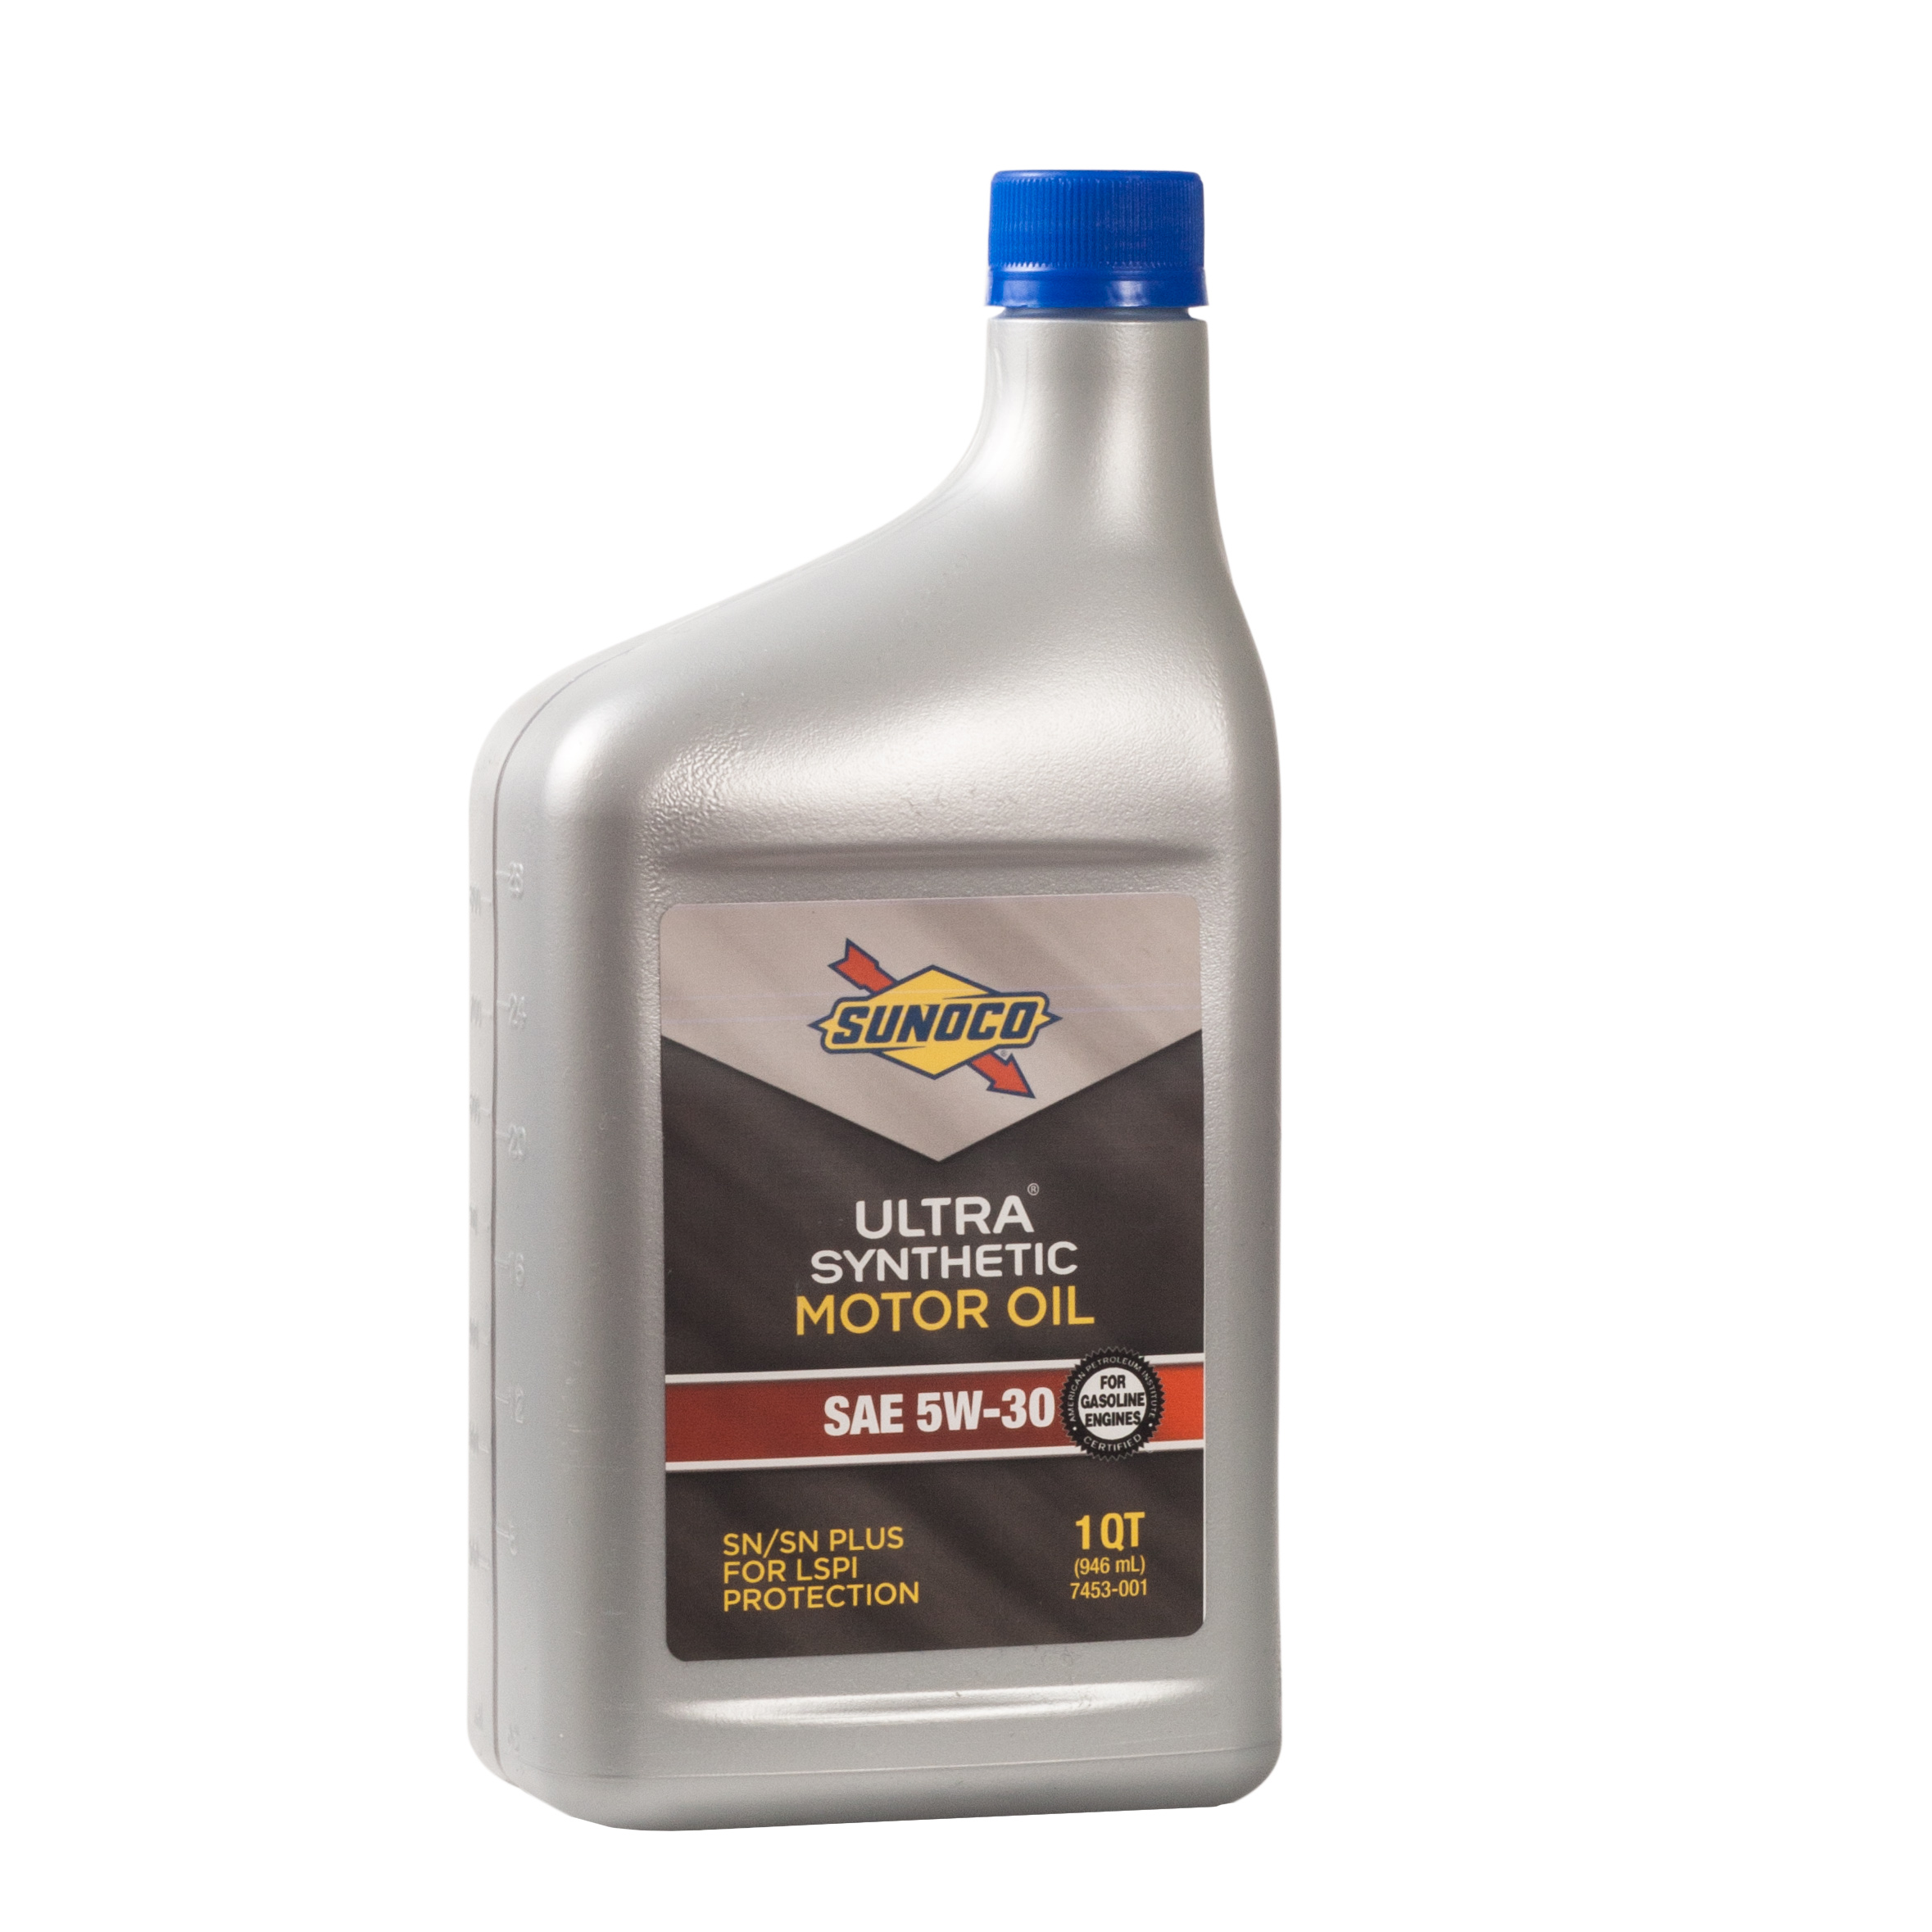  Купить Моторное масло Sunoco Ultra SP/GF-6A 5W-30, 0,946л.SUNOCO 7453001   